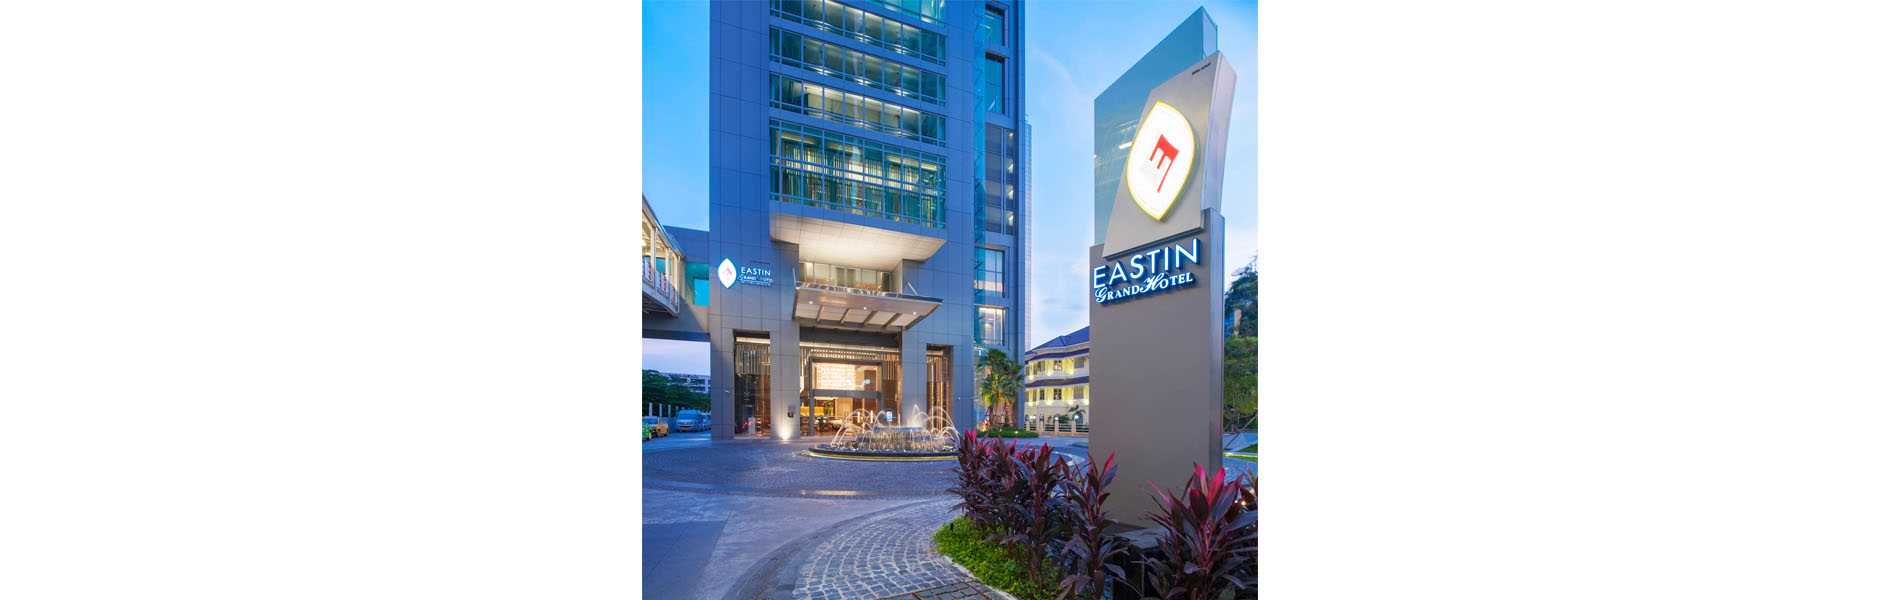 EASTIN GRAND HOTEL SATHORN 